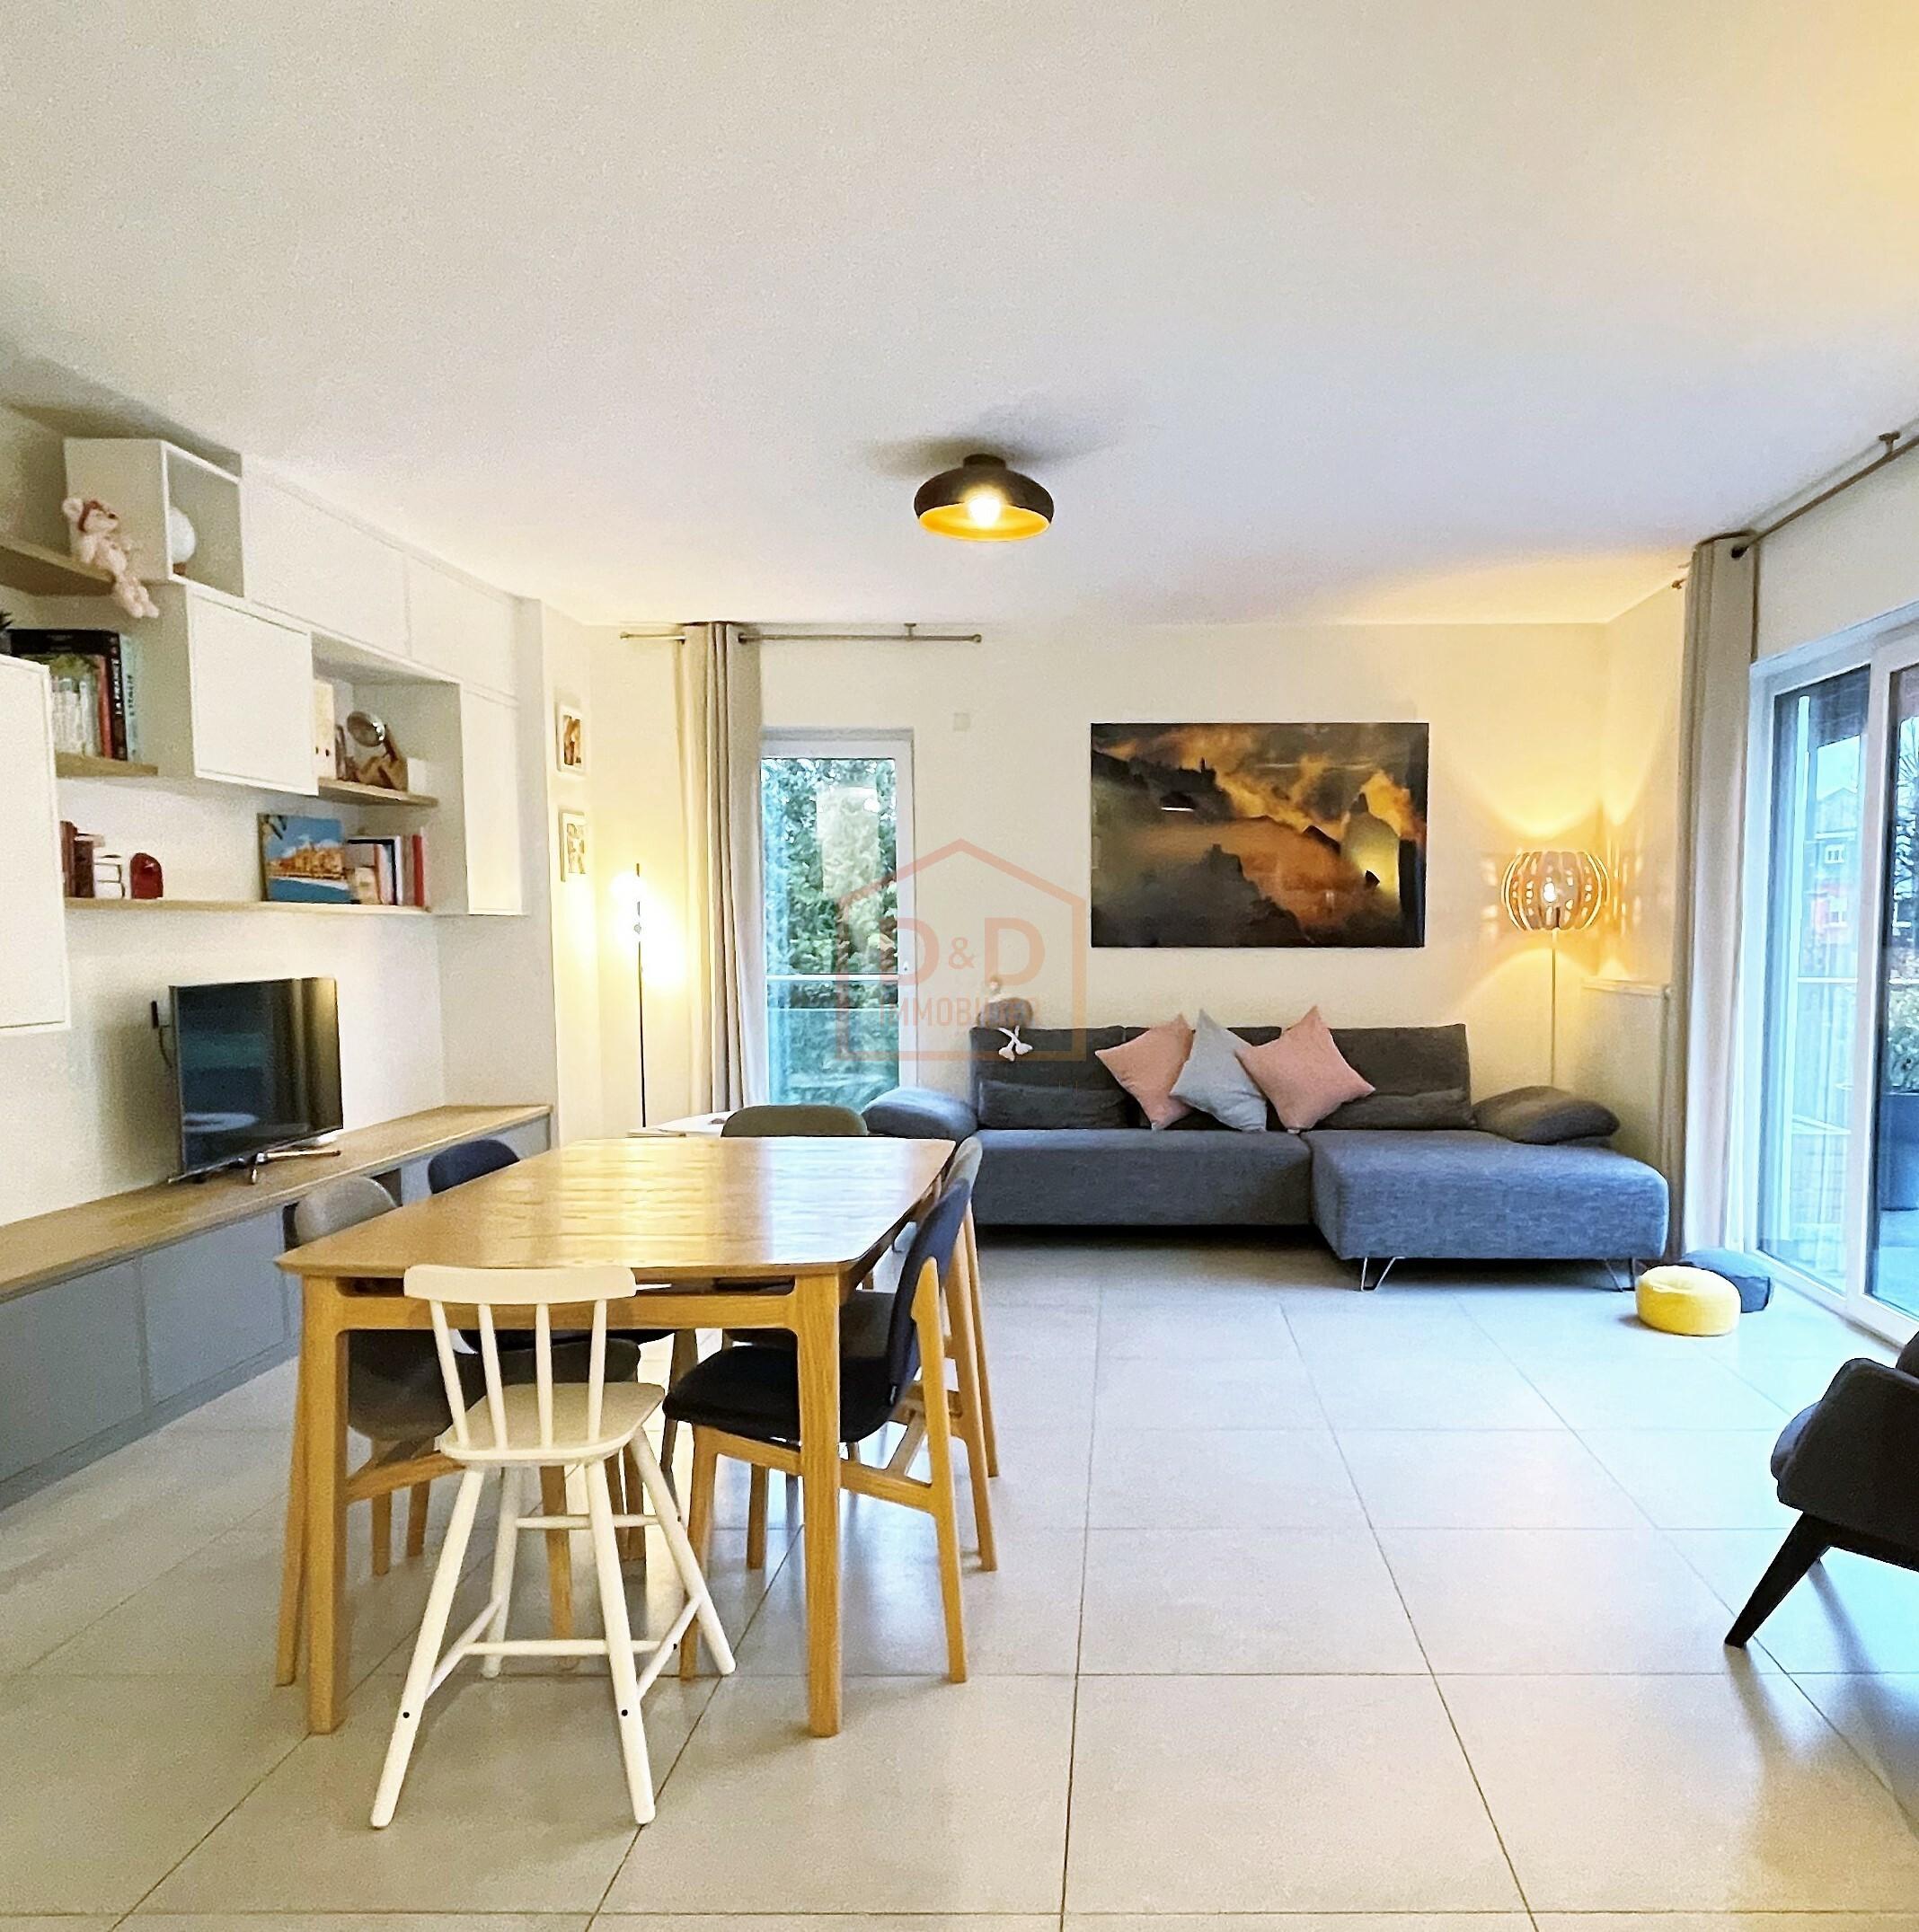 Appartement à Dalheim, 85,15 m², 2 chambres, 1 salle de bain, 2 garages, 720 000 €